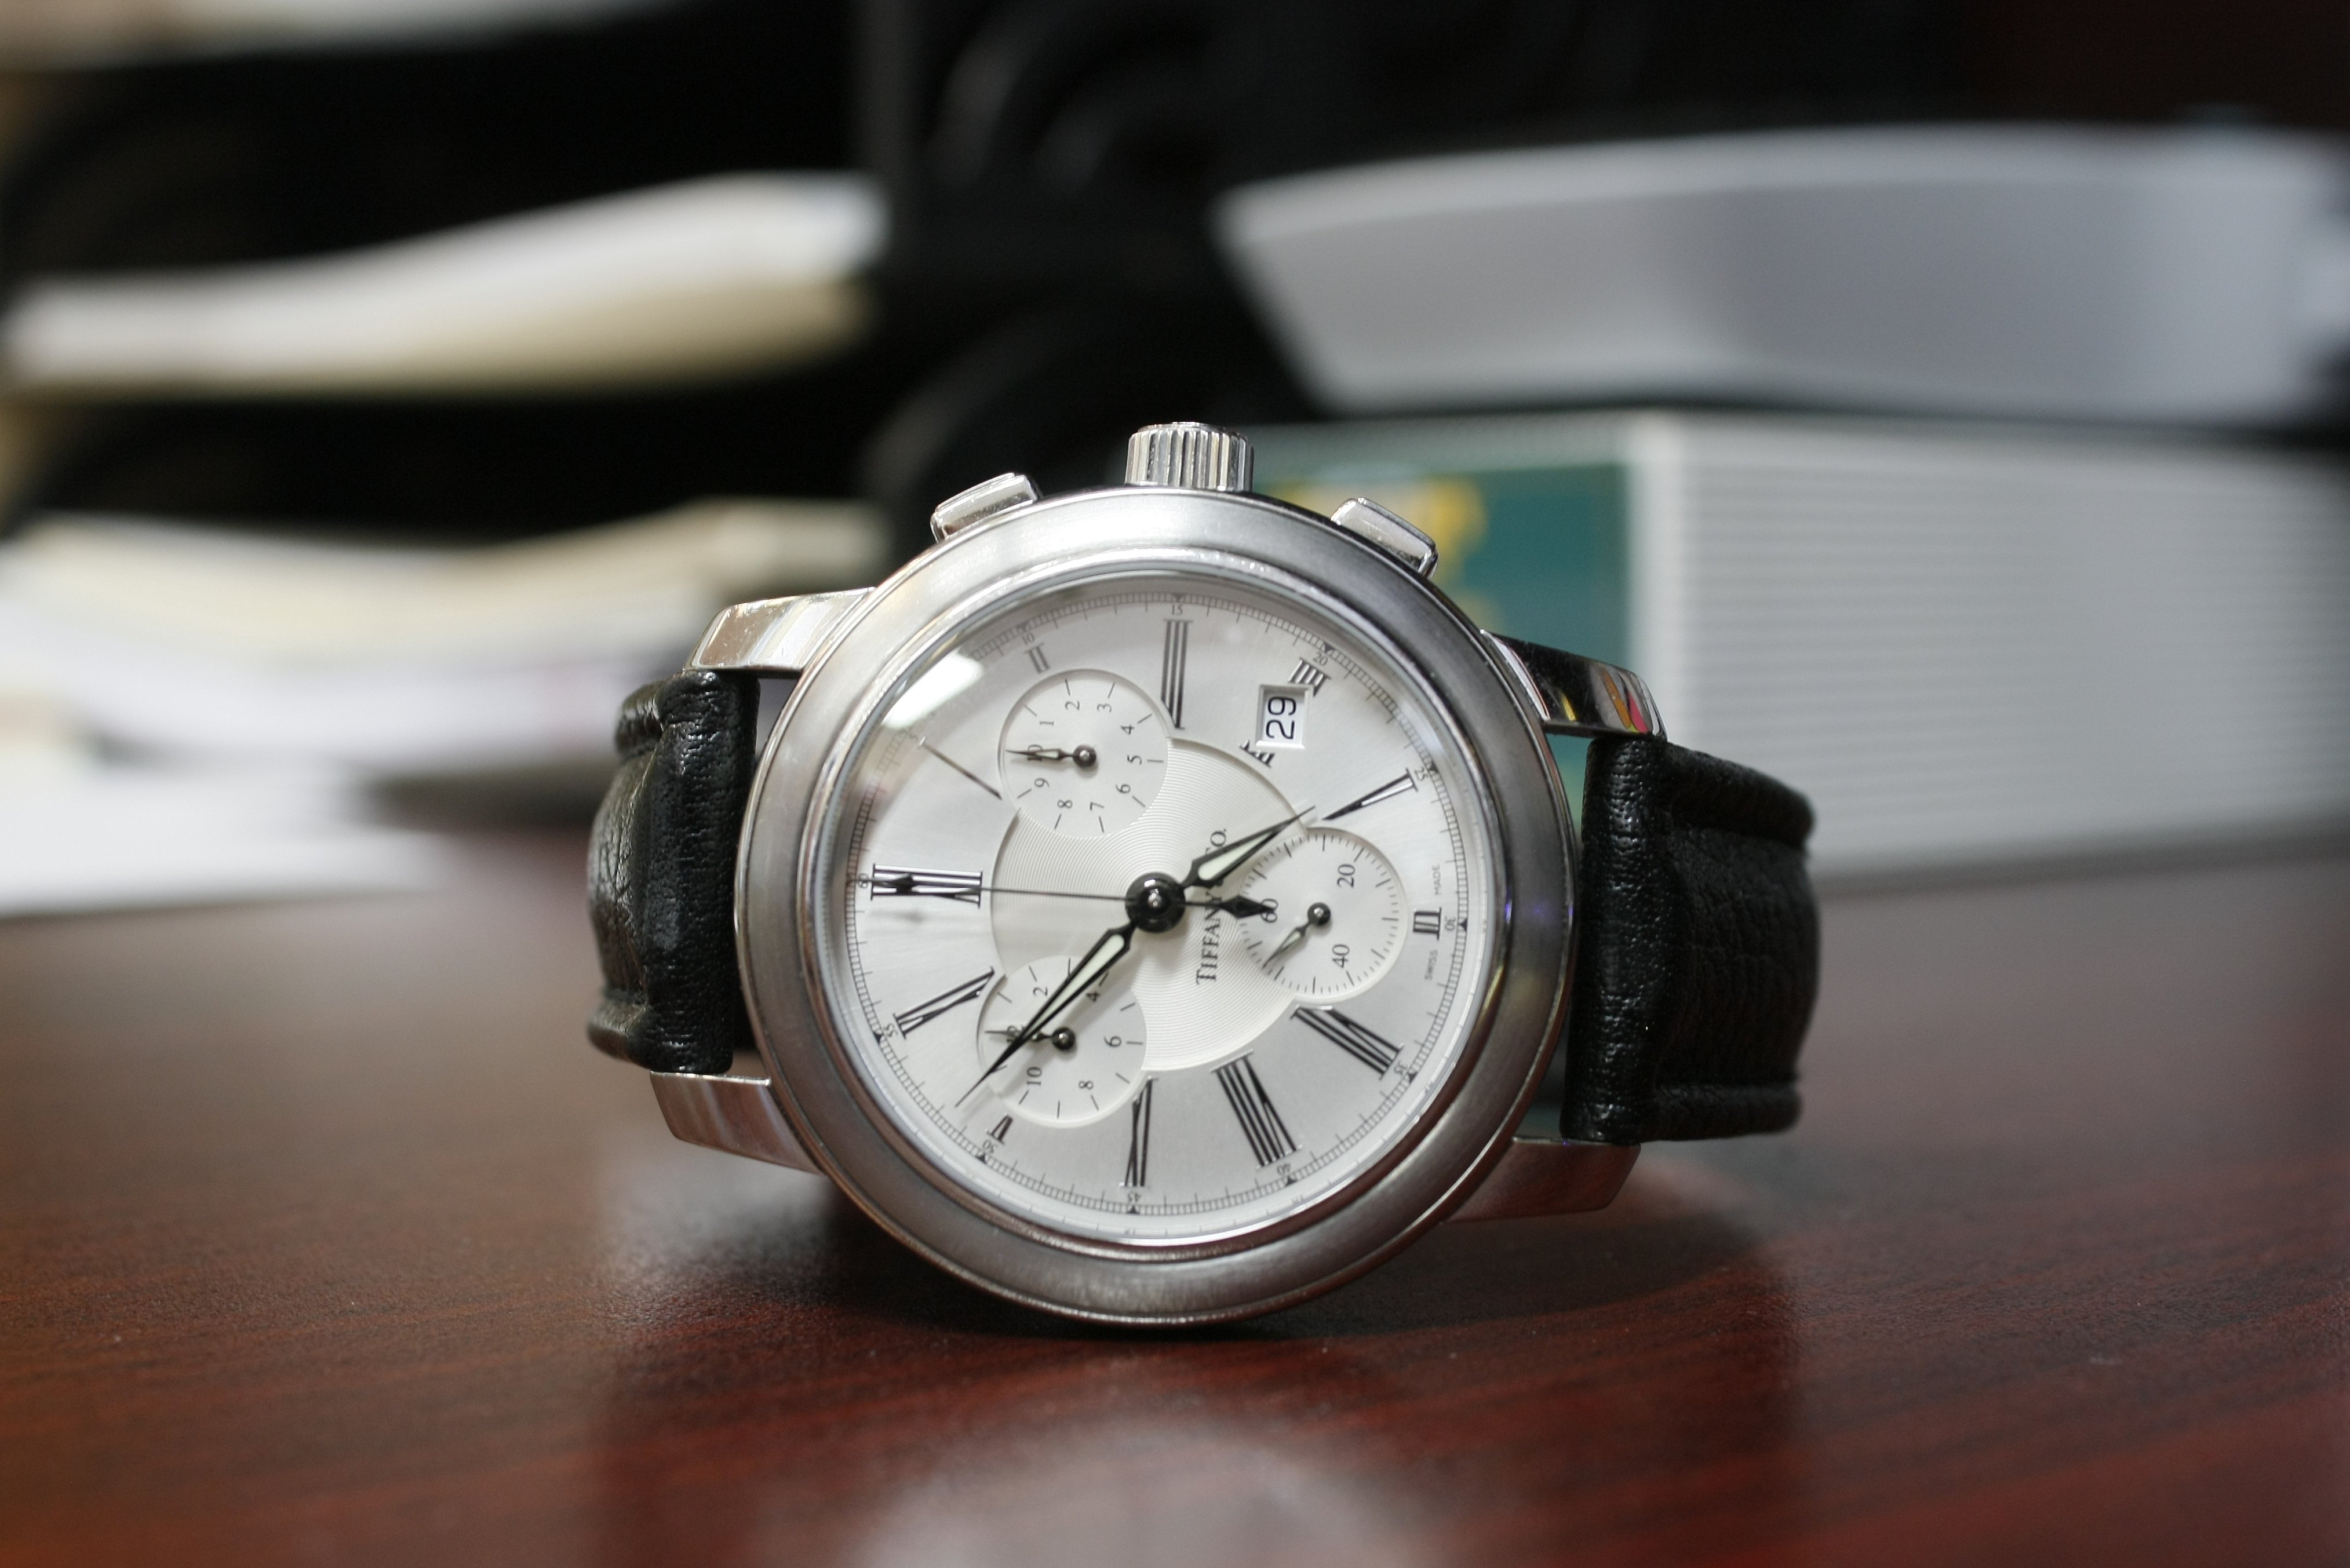 Tiffany & Co. Mark Chronograph Watch - $575